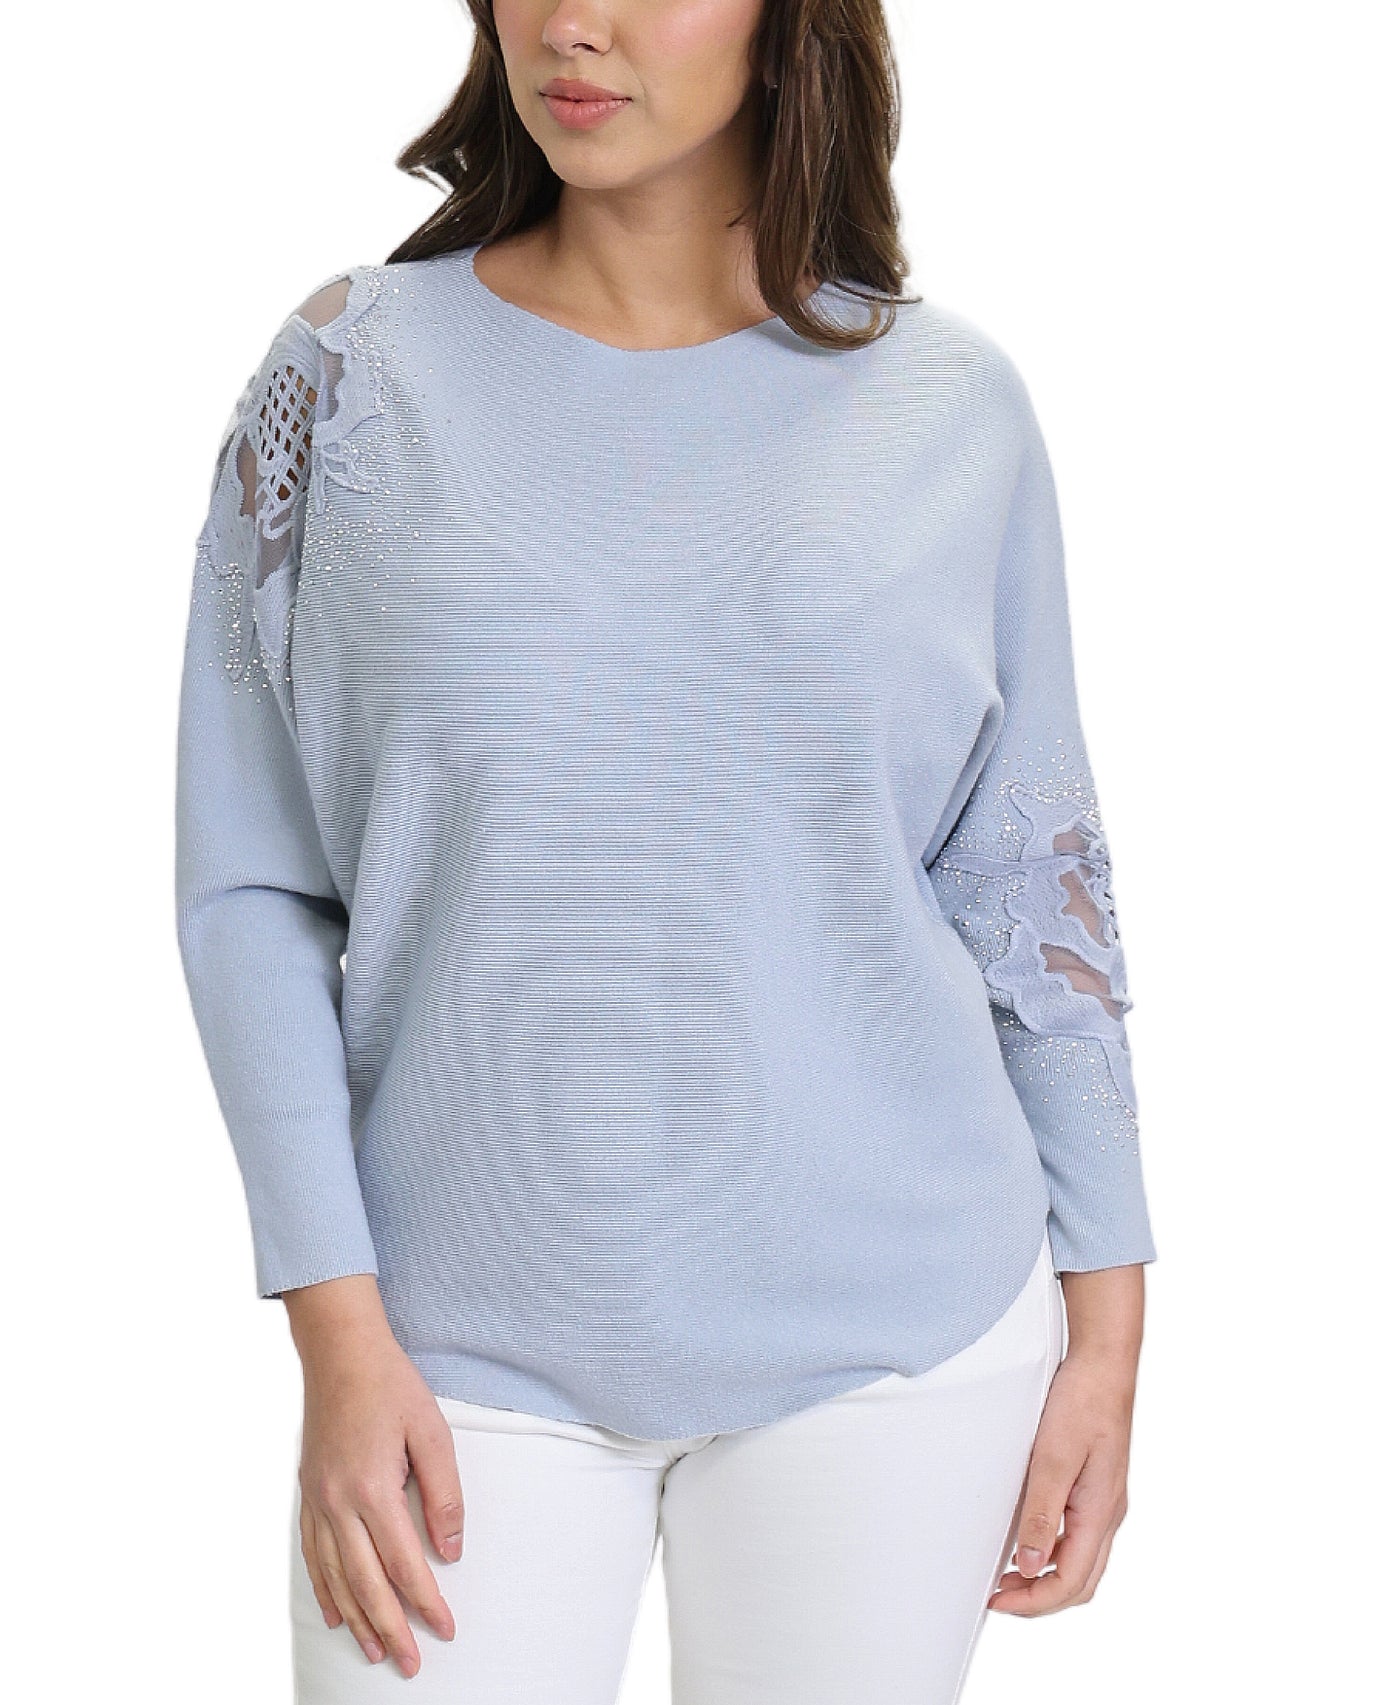 Sweater w/ Crochet Lace & Rhinestone Sleeves image 1